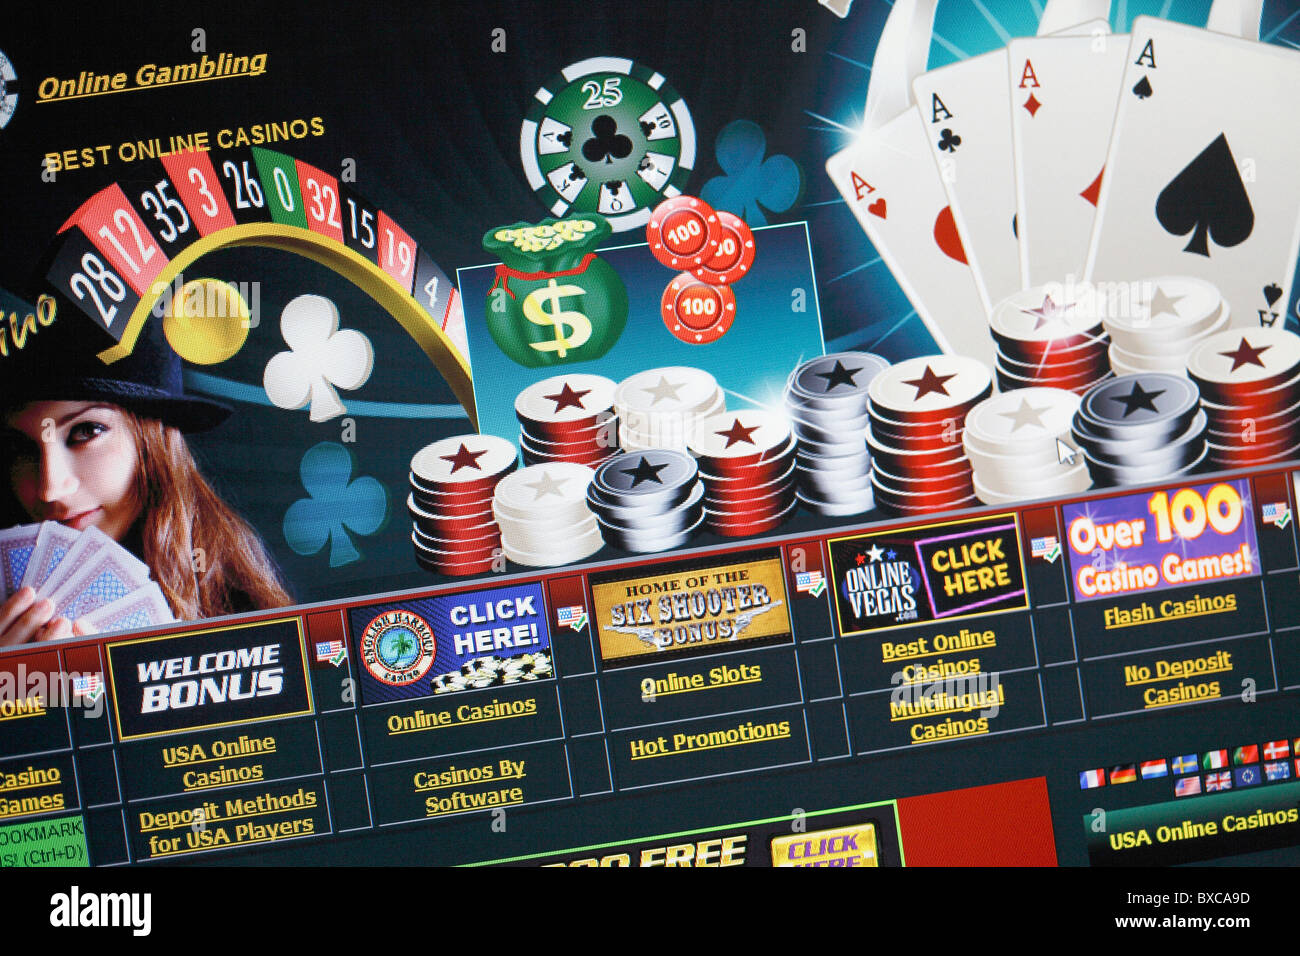 online gambling screenshot Stock Photo